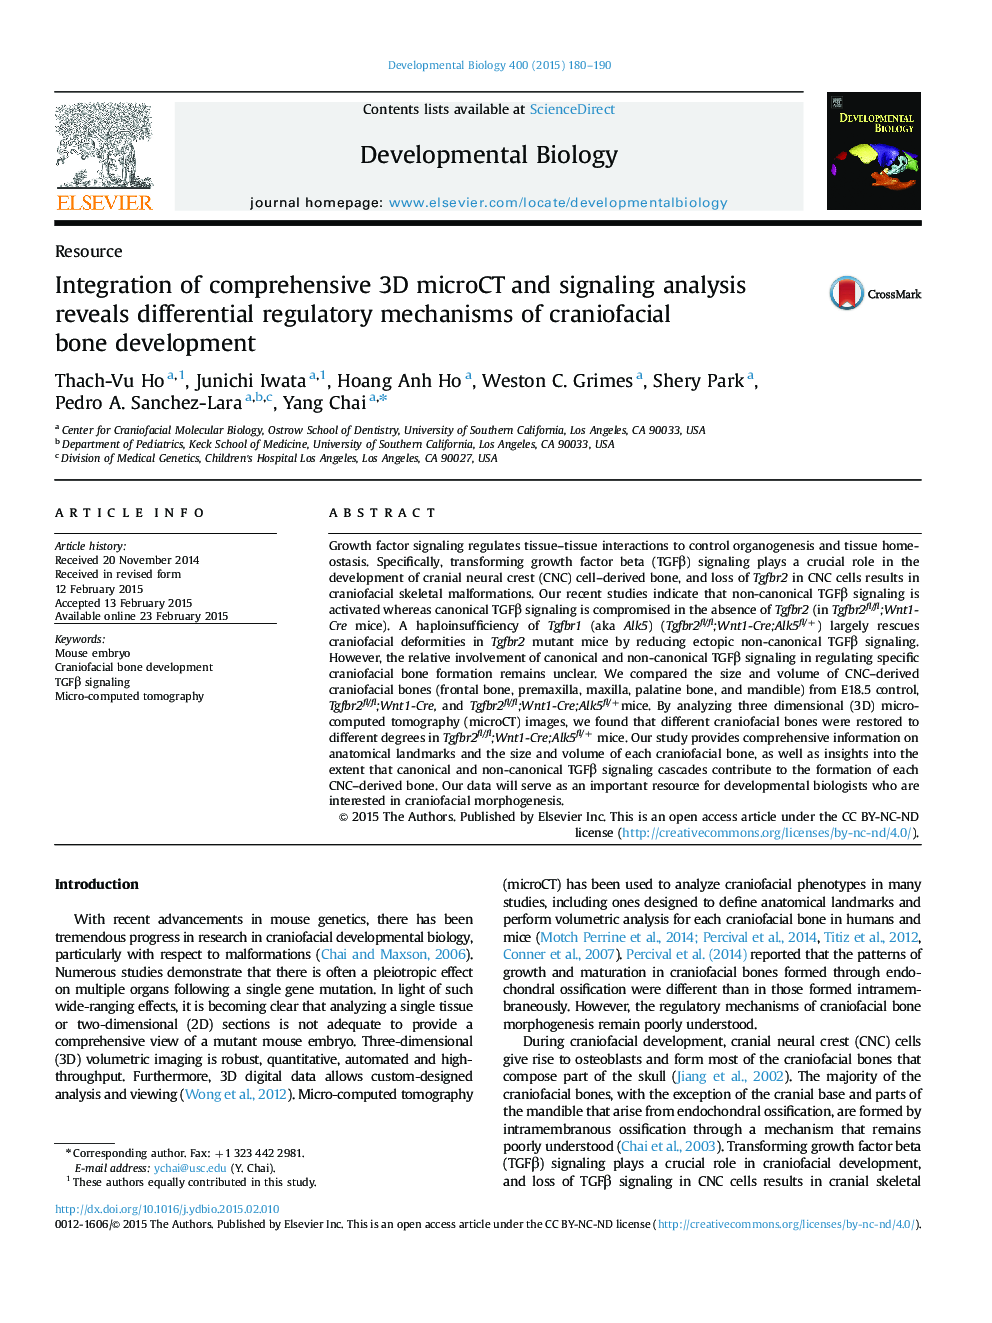 Integration of comprehensive 3D microCT and signaling analysis reveals differential regulatory mechanisms of craniofacial bone development